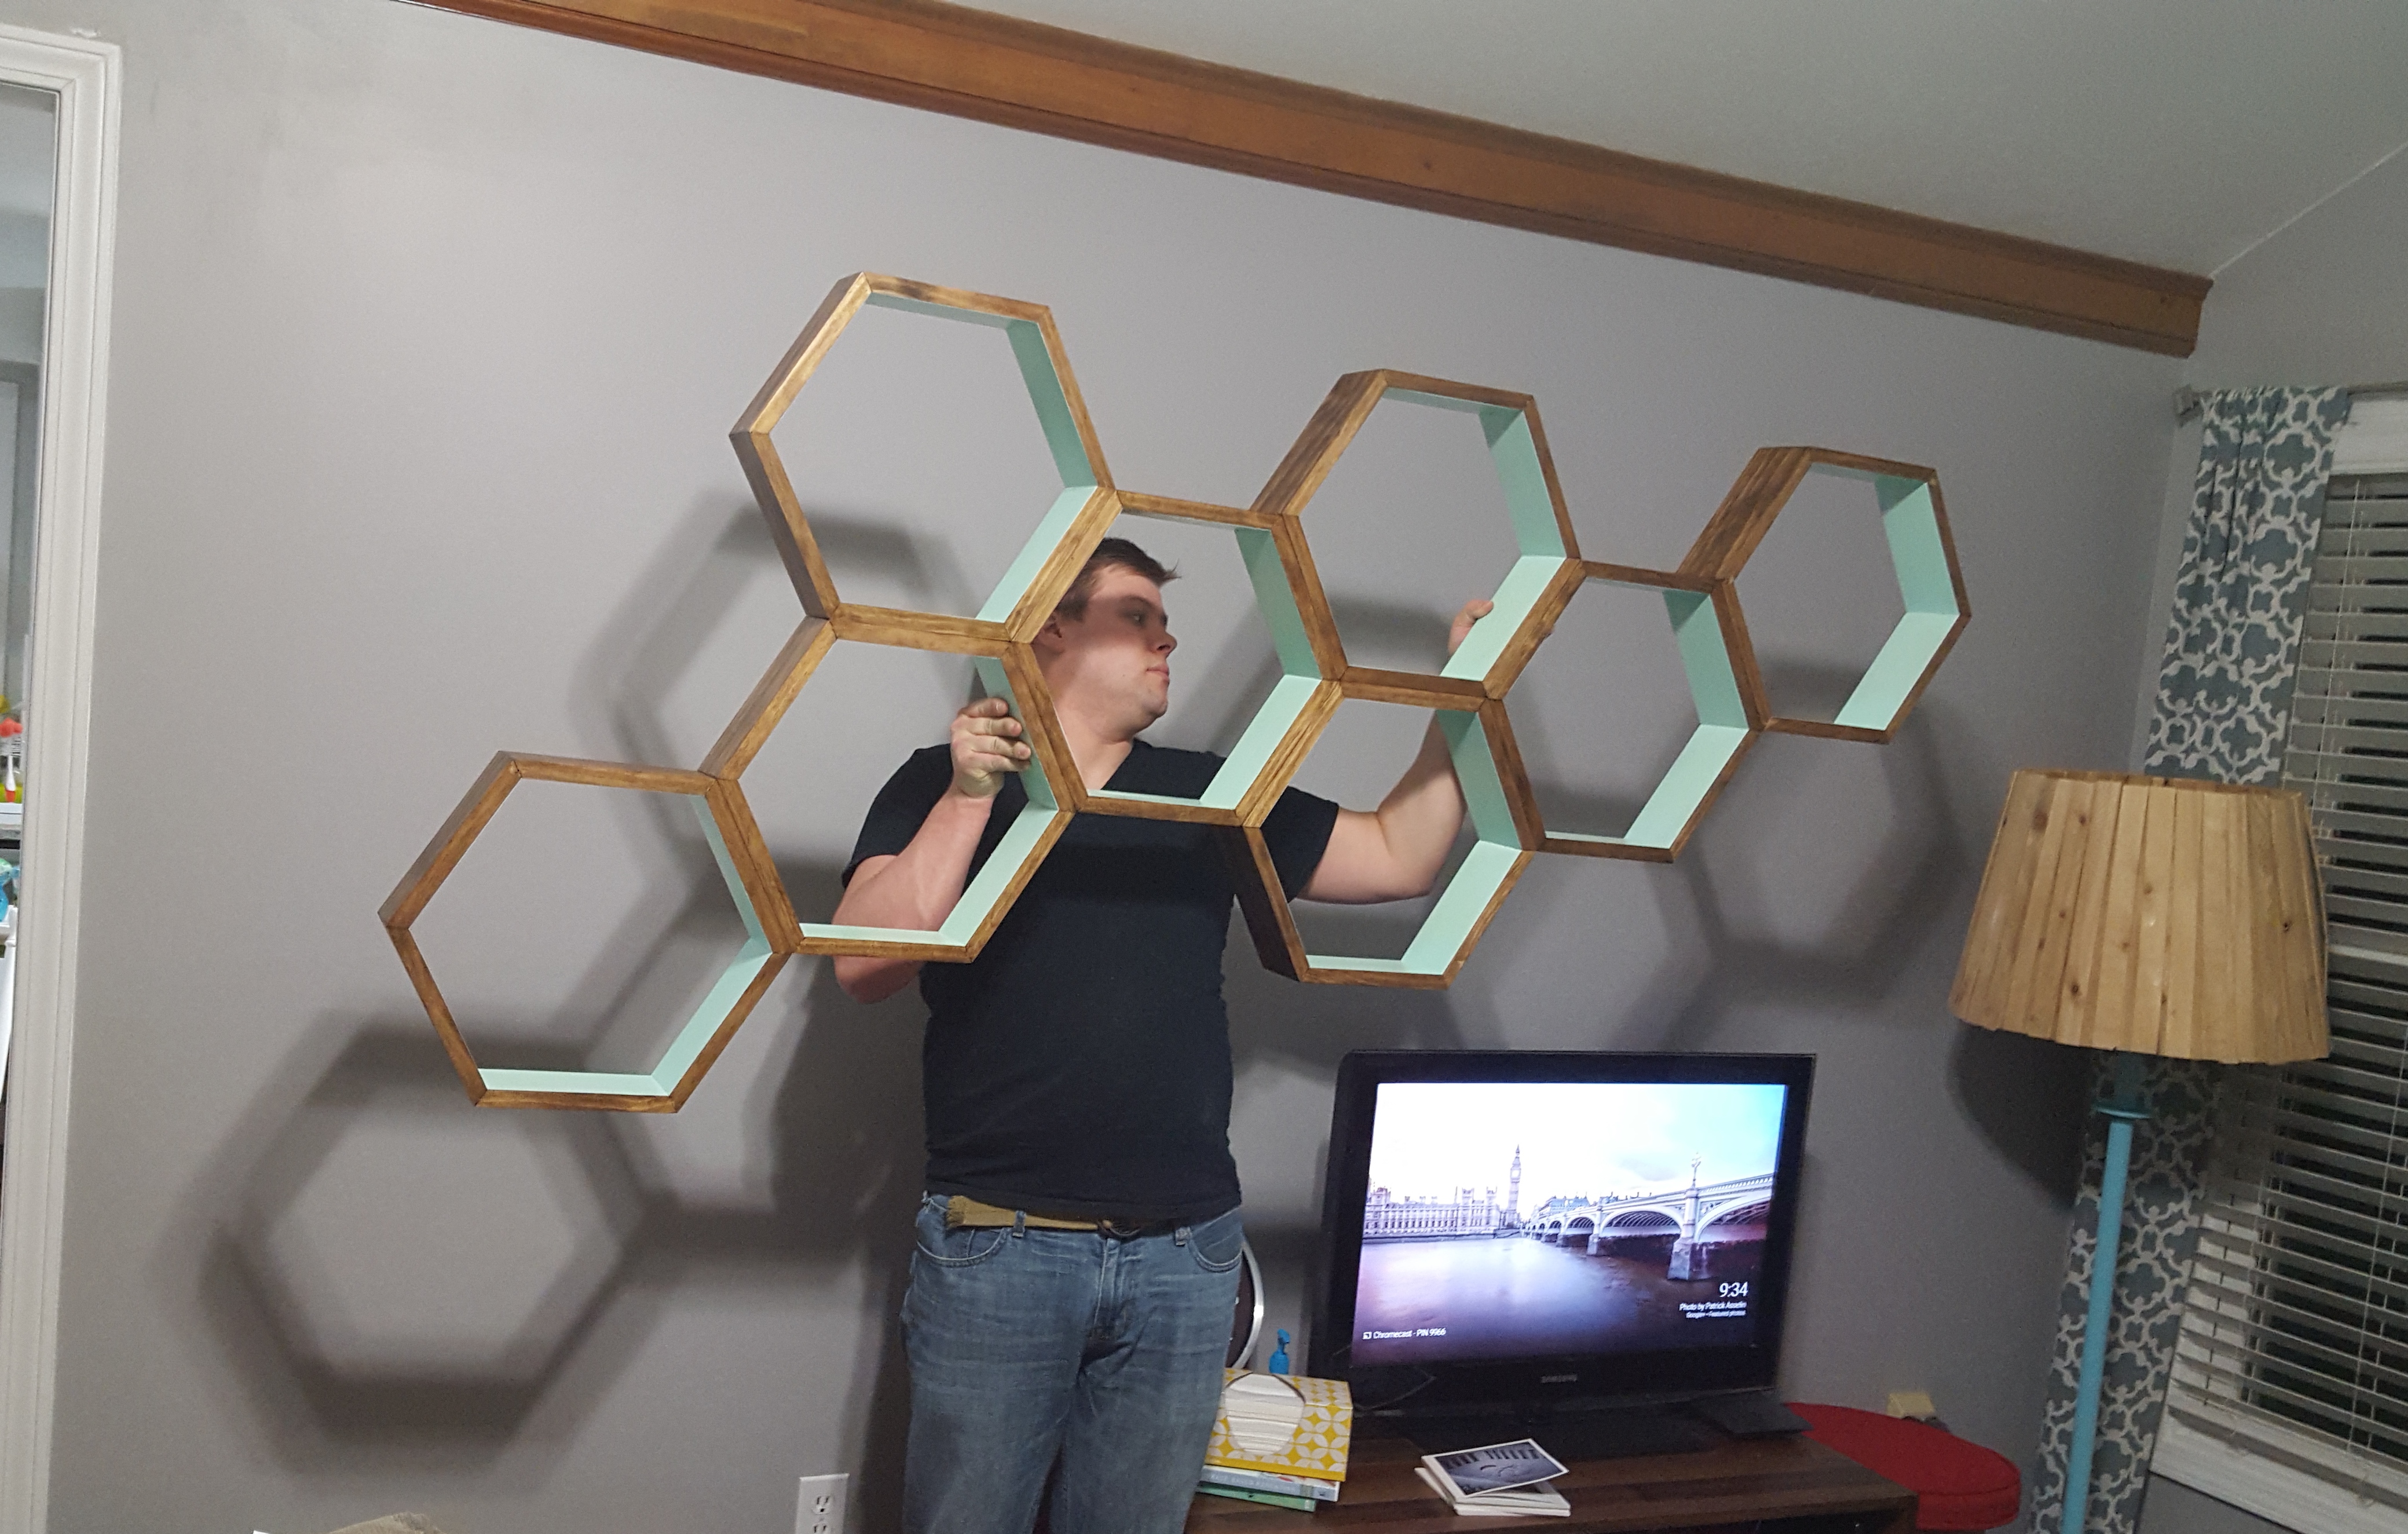 Diy Honeycomb Shelves Loving Here, How To Mount Honeycomb Shelves